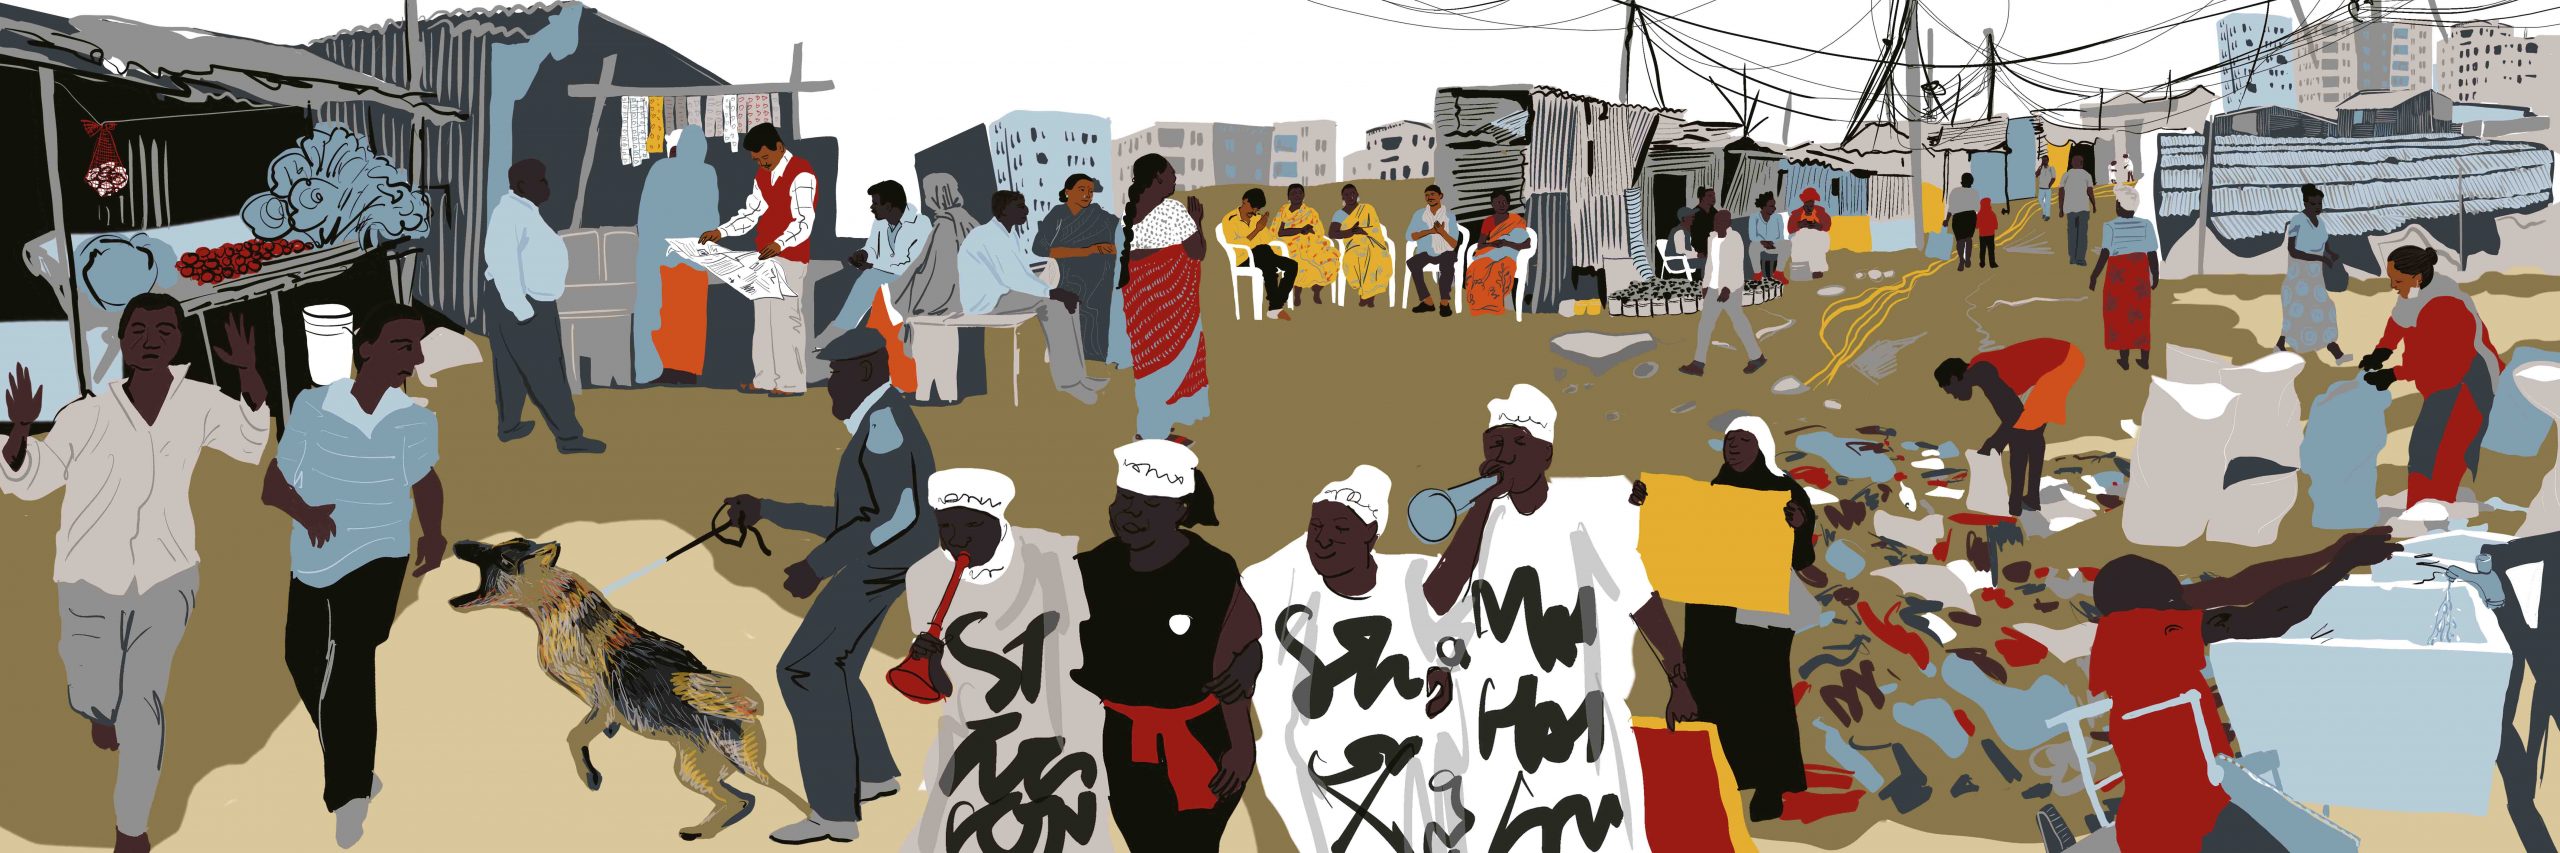 An illustration showing life in an informal settlement